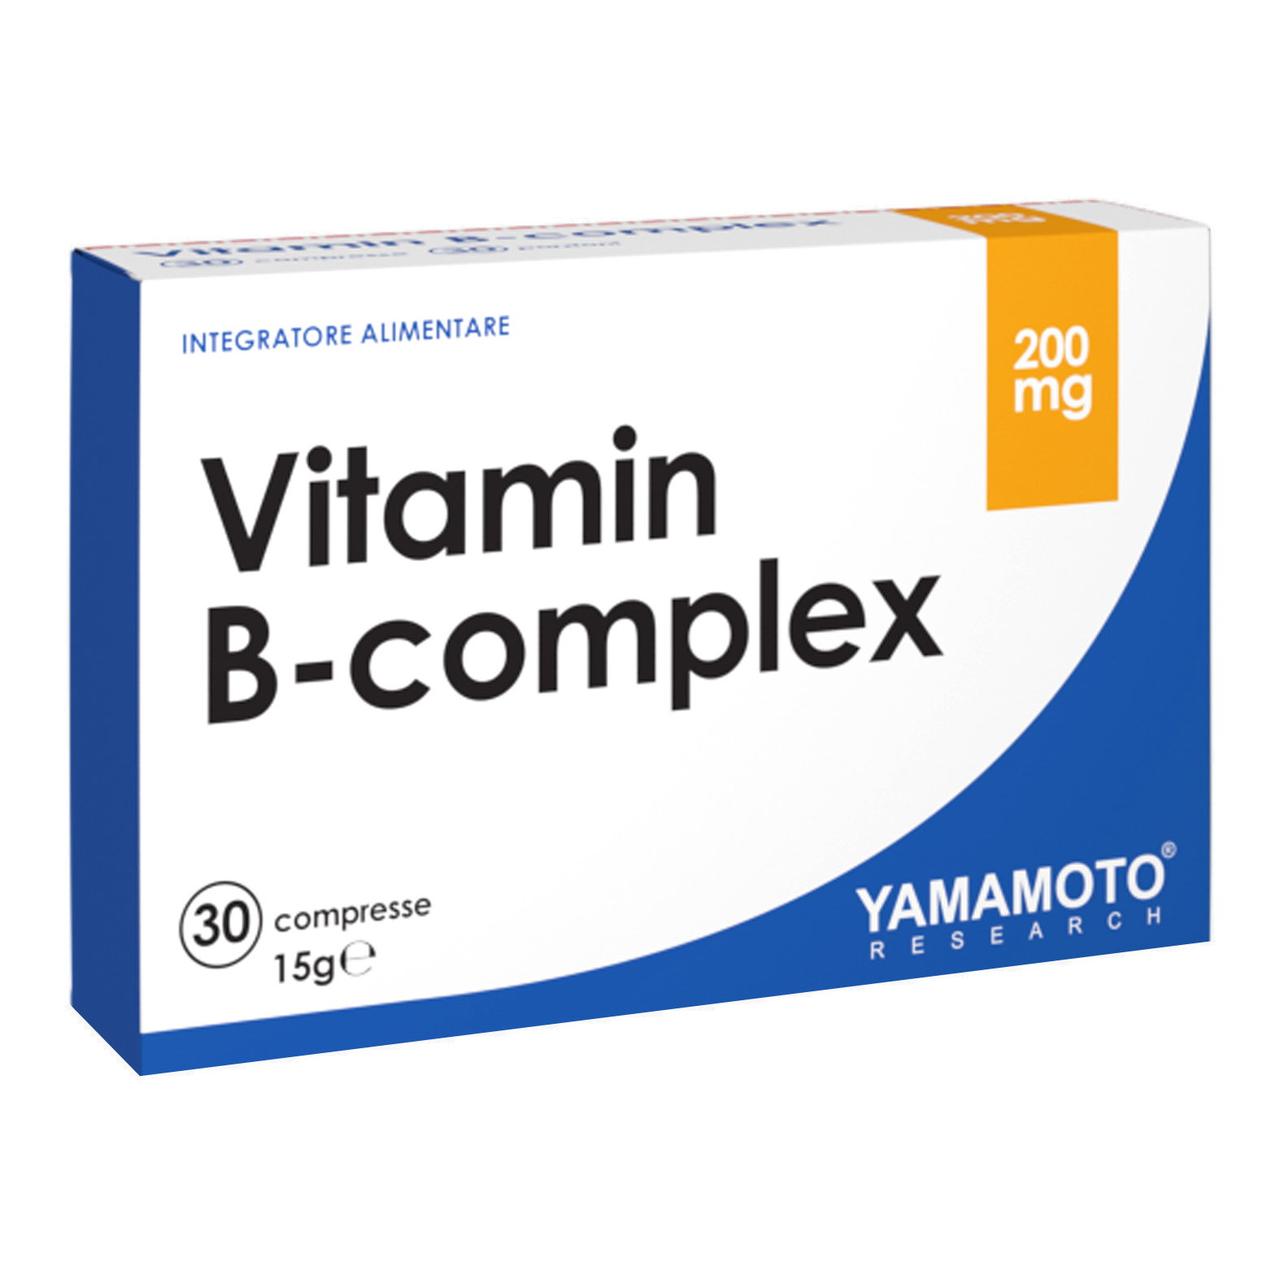 Yamamoto Nutrition Комплекс витаминов группы Б Yamamoto nutrition Vitamin B-Complex 30 капсул, , 